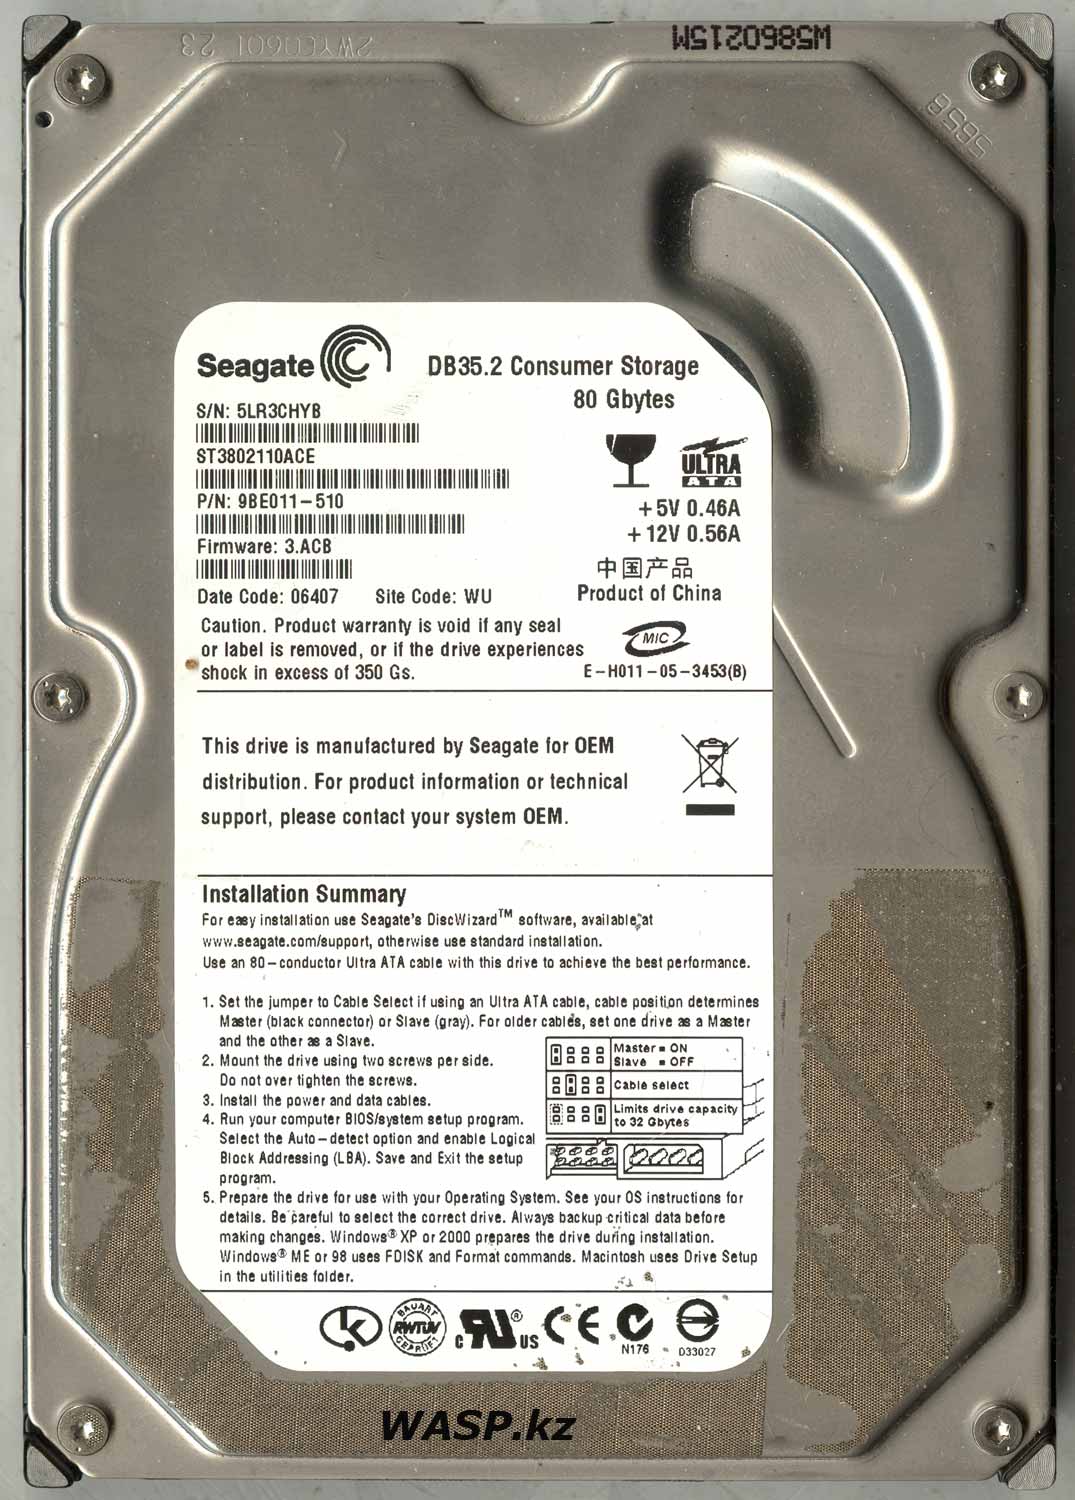 Seagate DB35.2 Consumer Storage ST3802110ACE описание жесткого диска